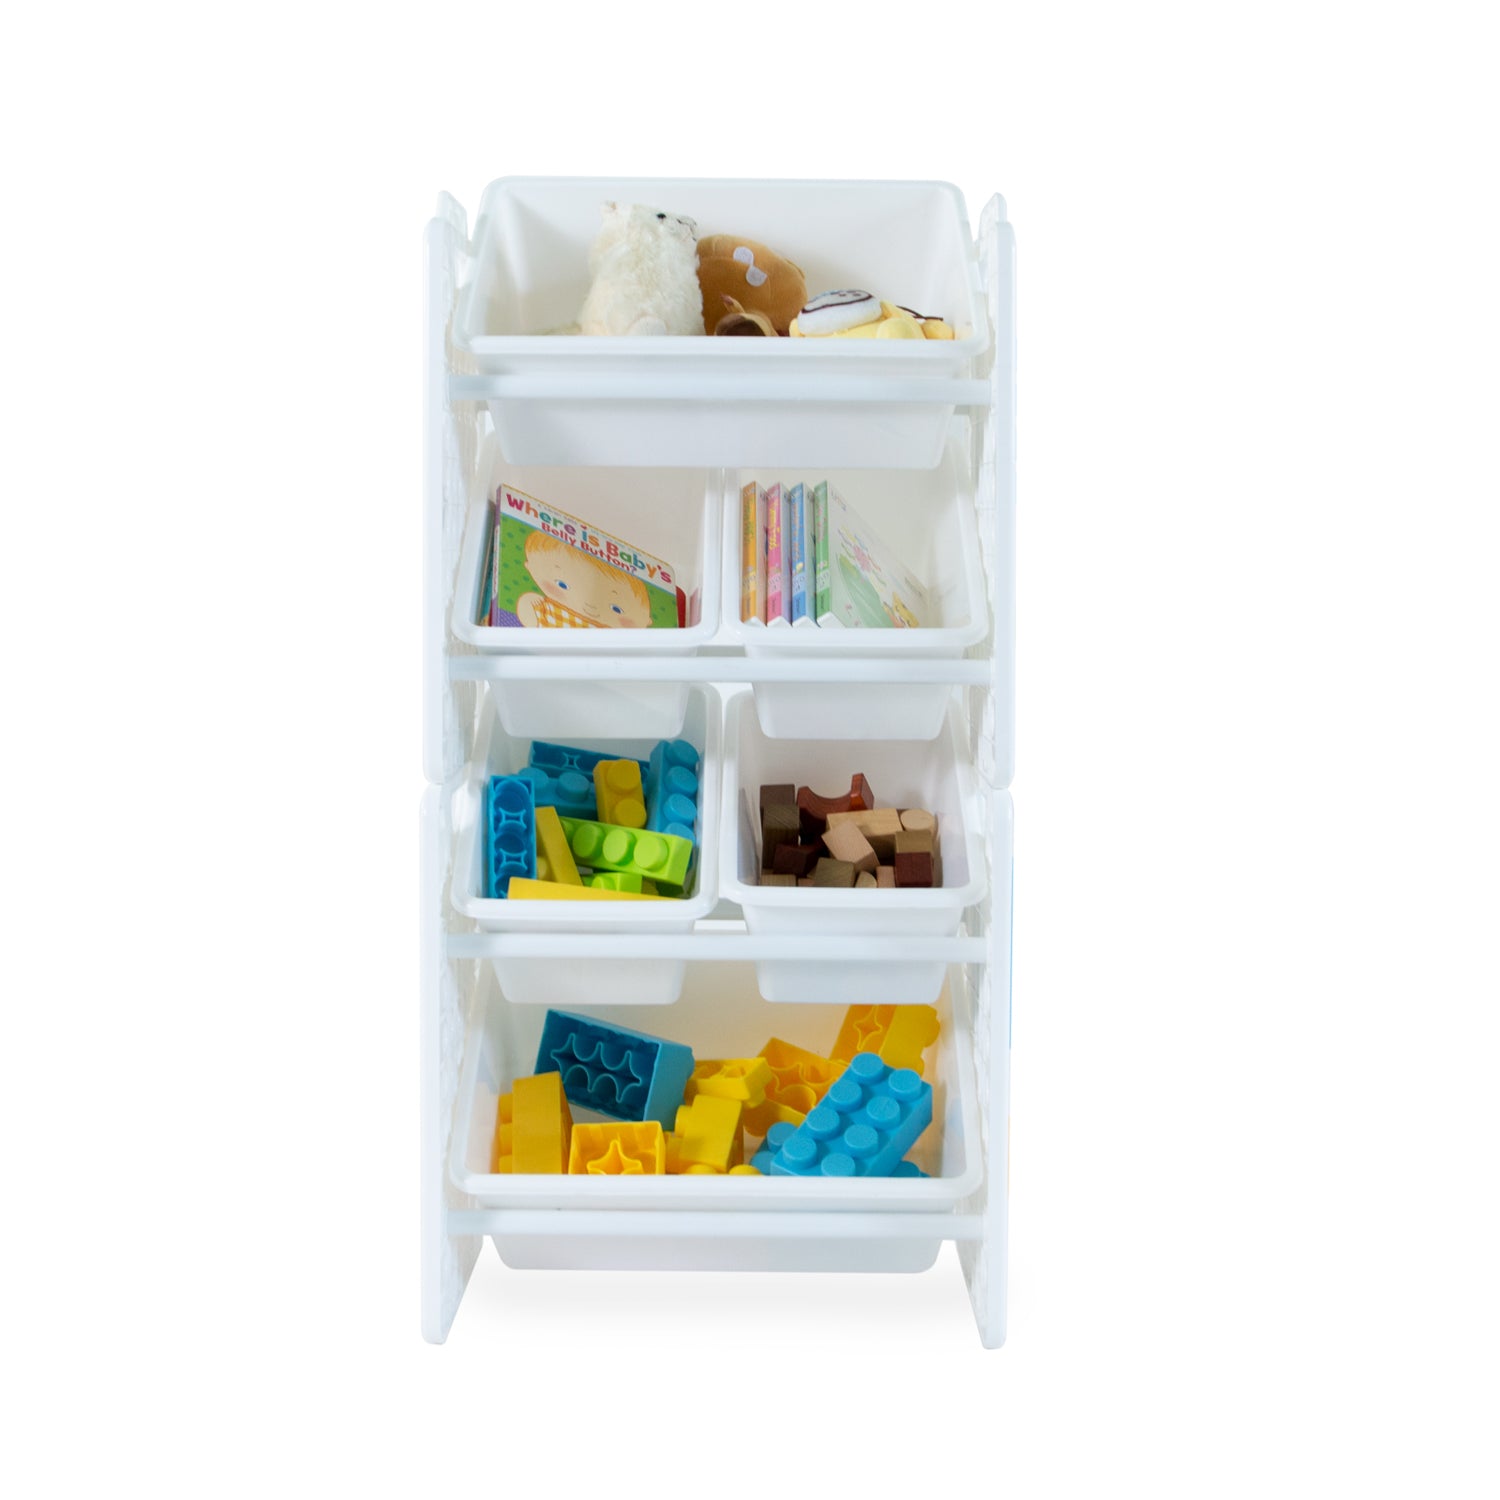 UNiPLAY 6 Bins Toy Storage Organizer - White (UB45511)